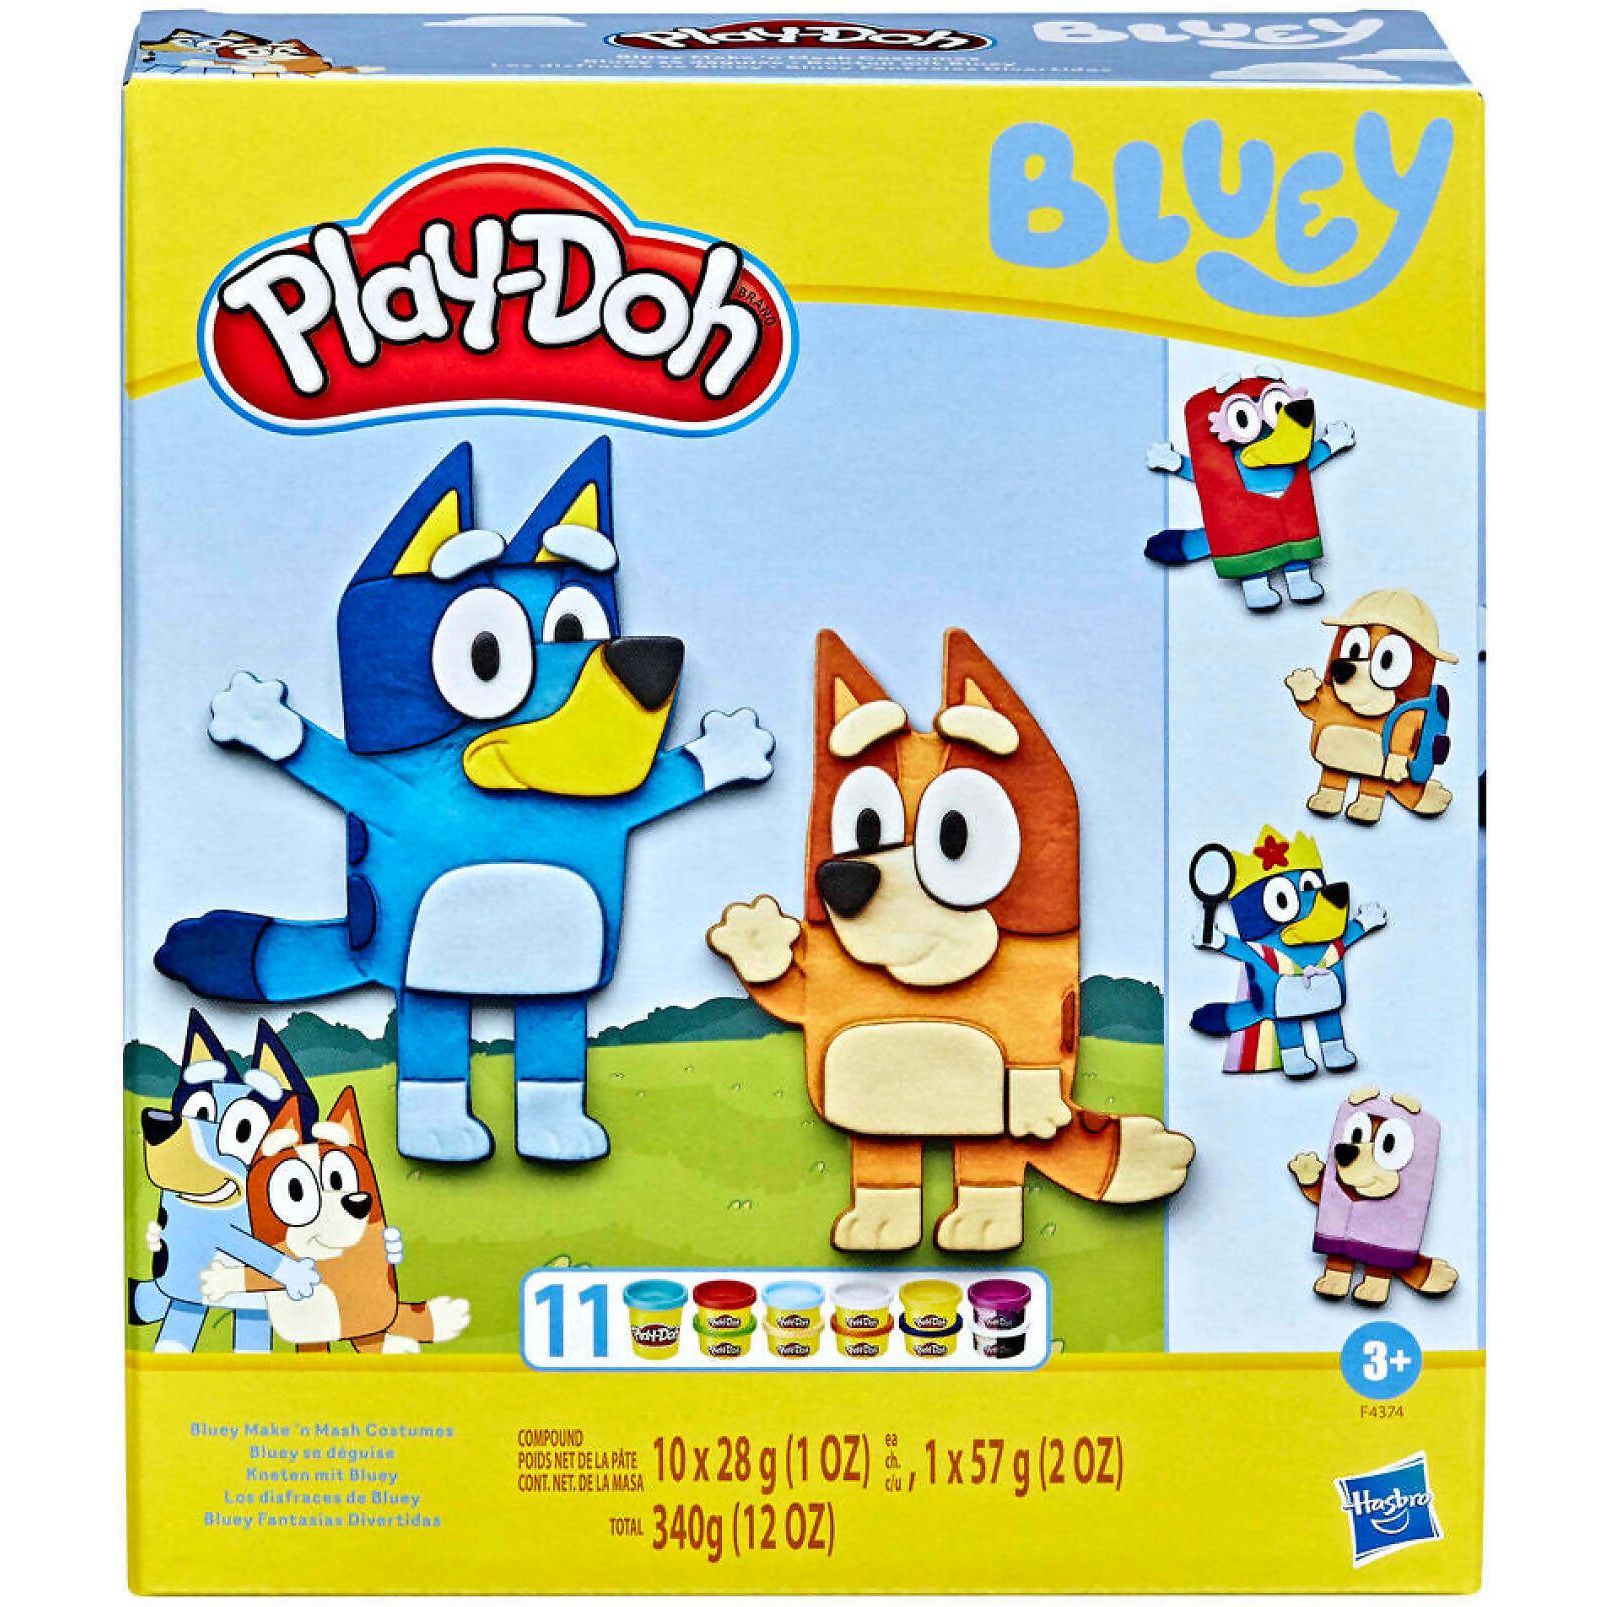 Набор Play-Doh Bluey Make N Mash Costumes игровой, для лепки, F43745L0